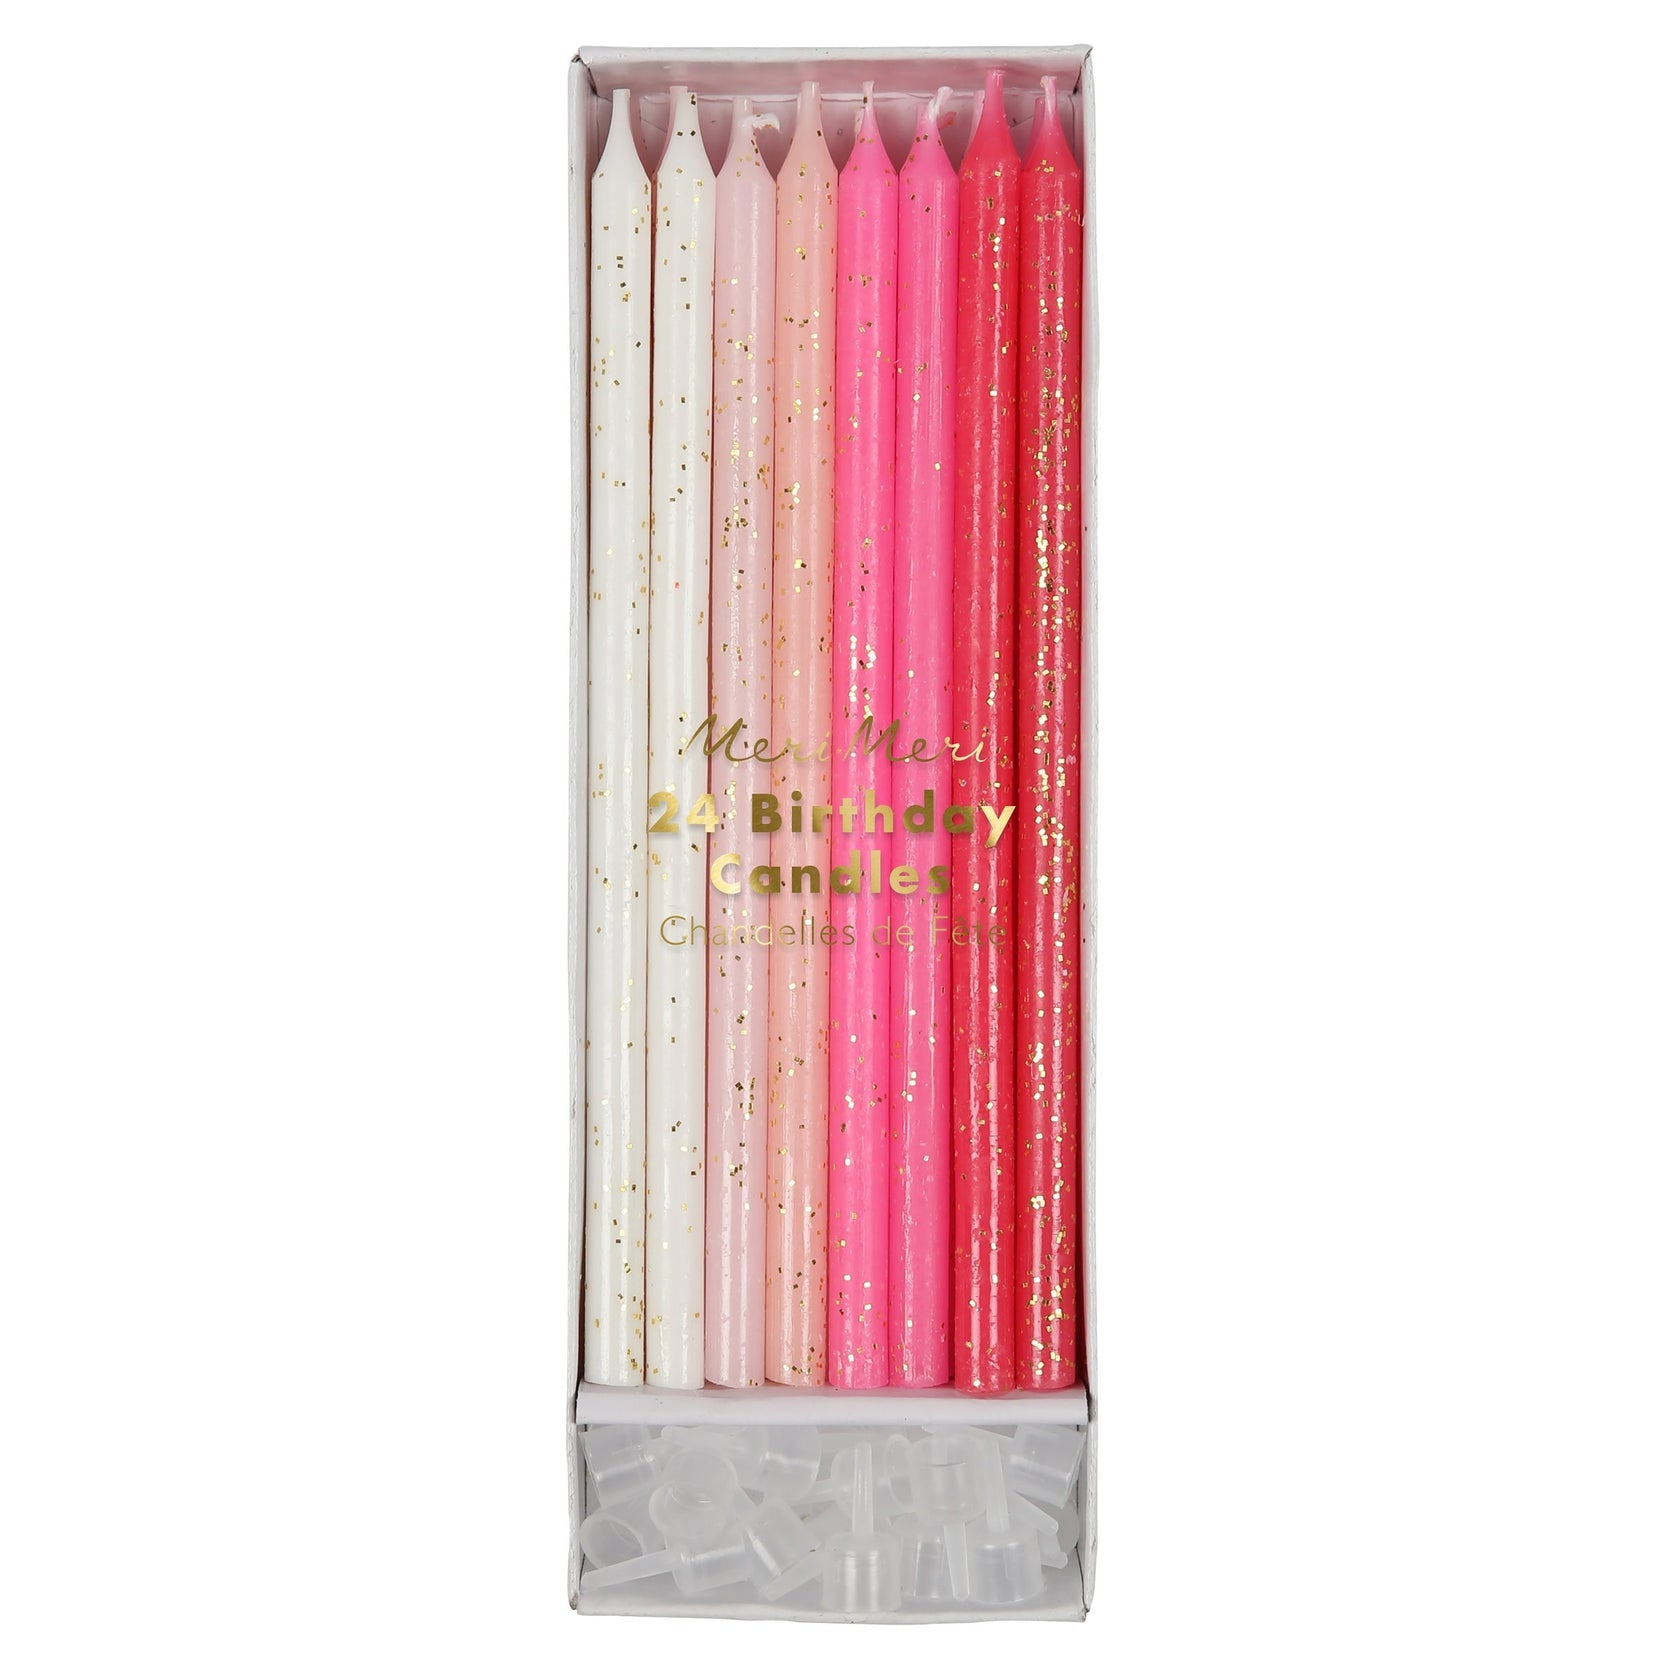 Meri Meri Pink Glitter Candles x24